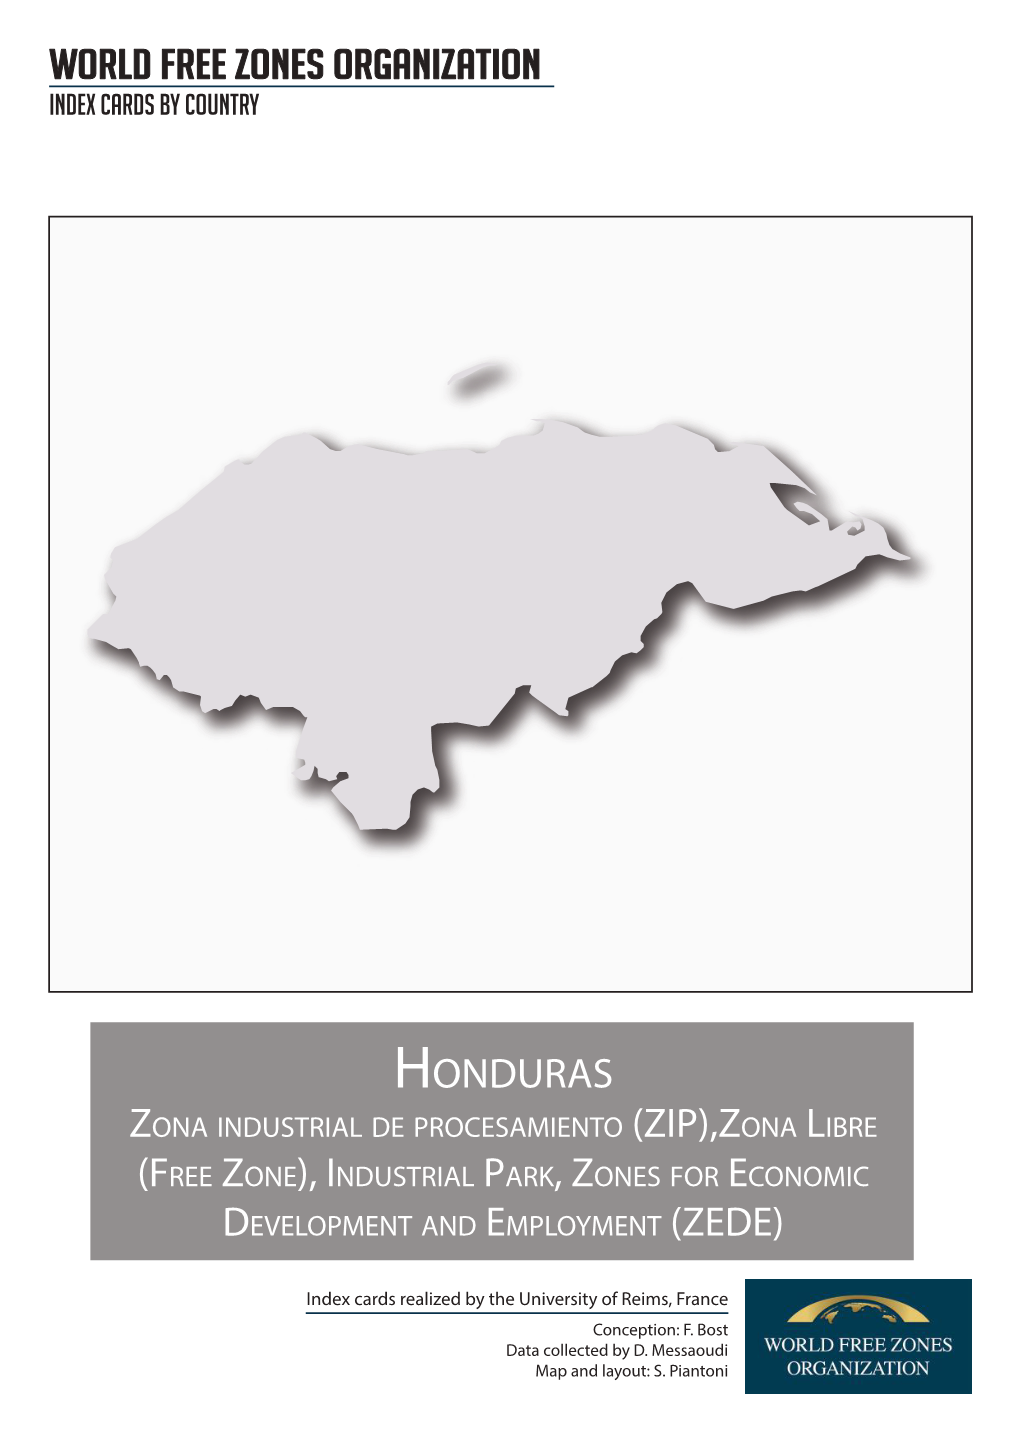 World Free Zones Organization HONDURAS (ZIP),ZONA LIBRE